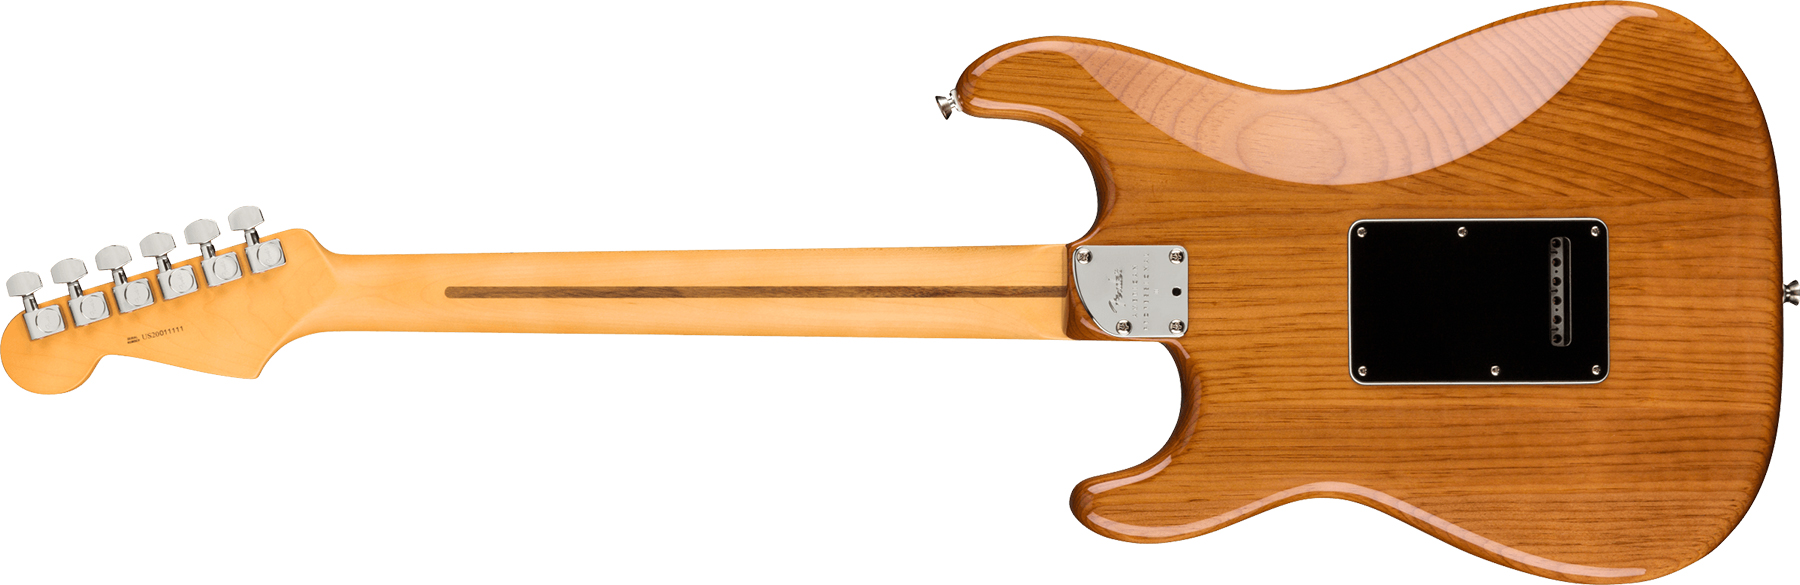 Fender Strat American Professional Ii Hss Usa Mn - Roasted Pine - Str shape electric guitar - Variation 1